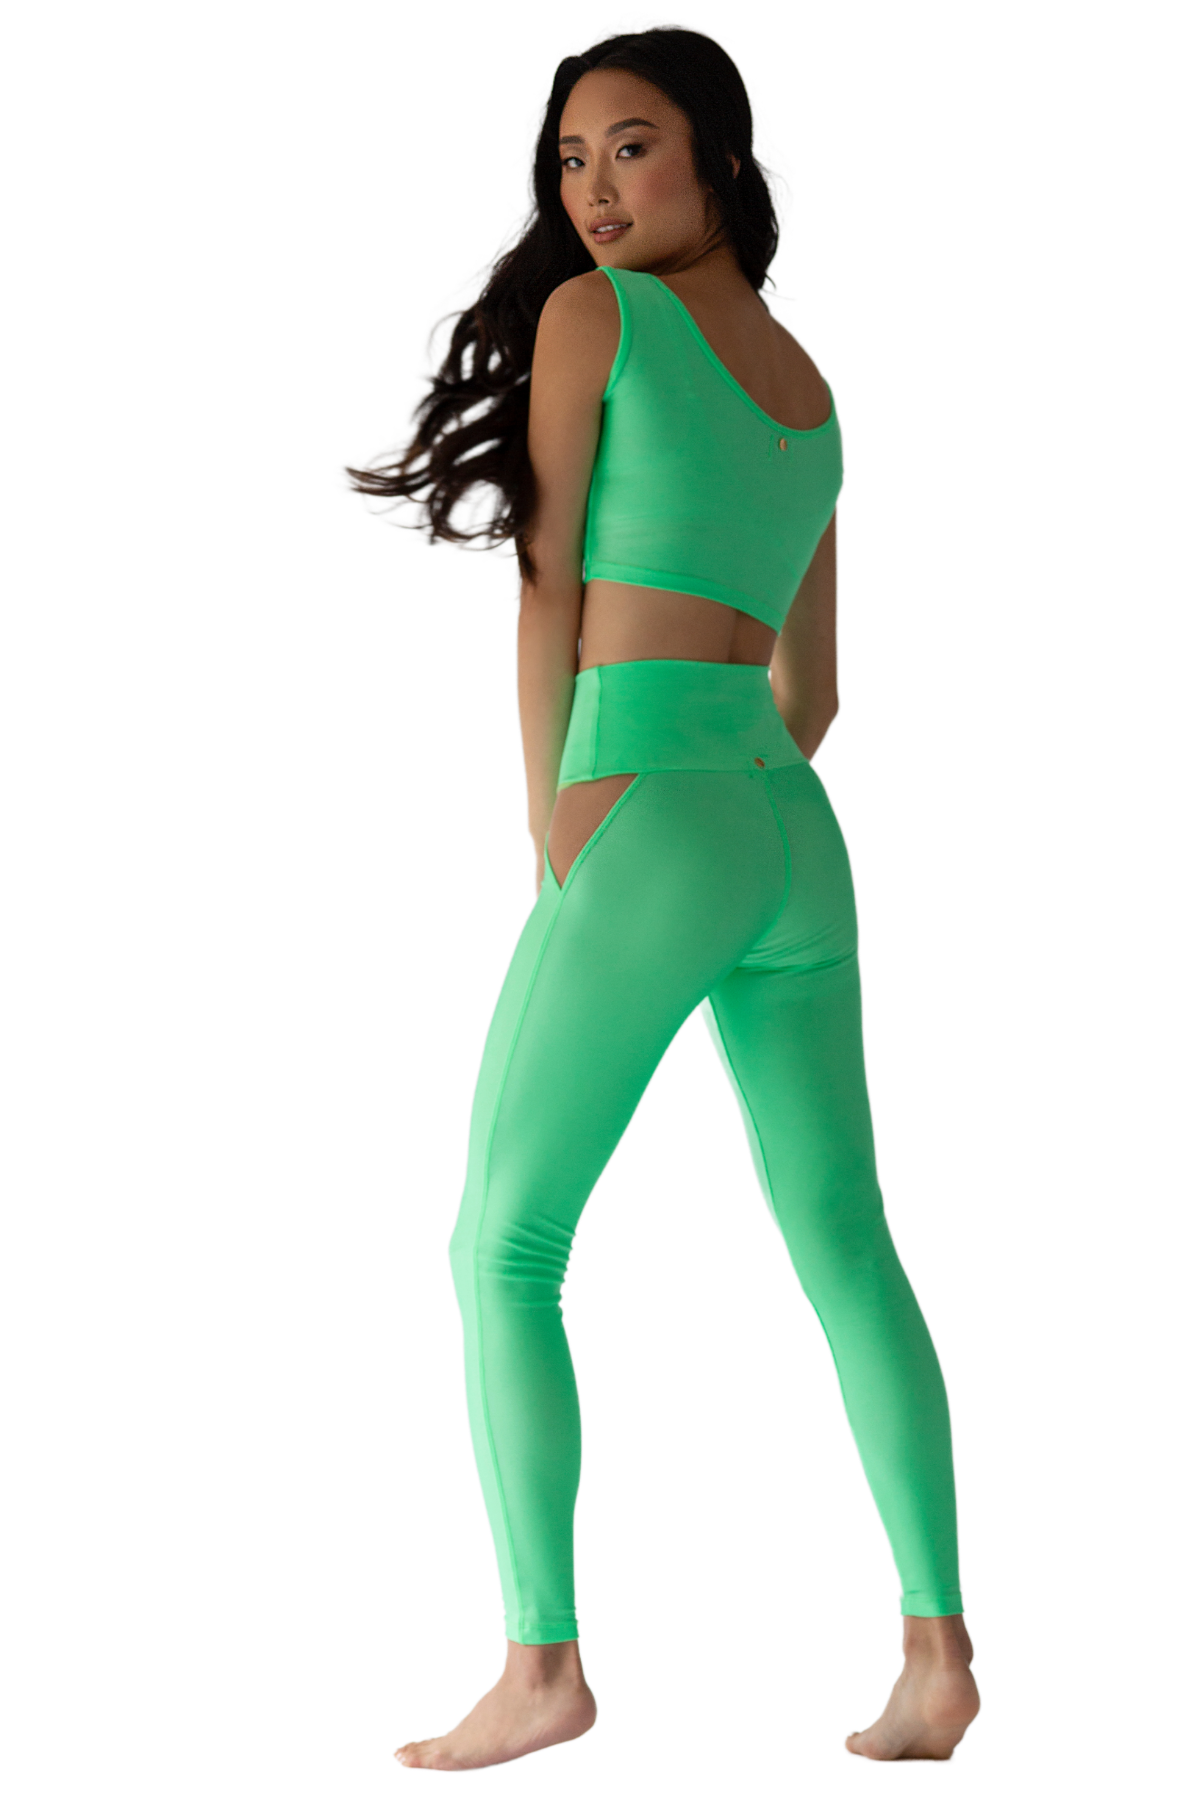 green activewear sports top u shaped neckline. high waist legging w/ mesh cutouts